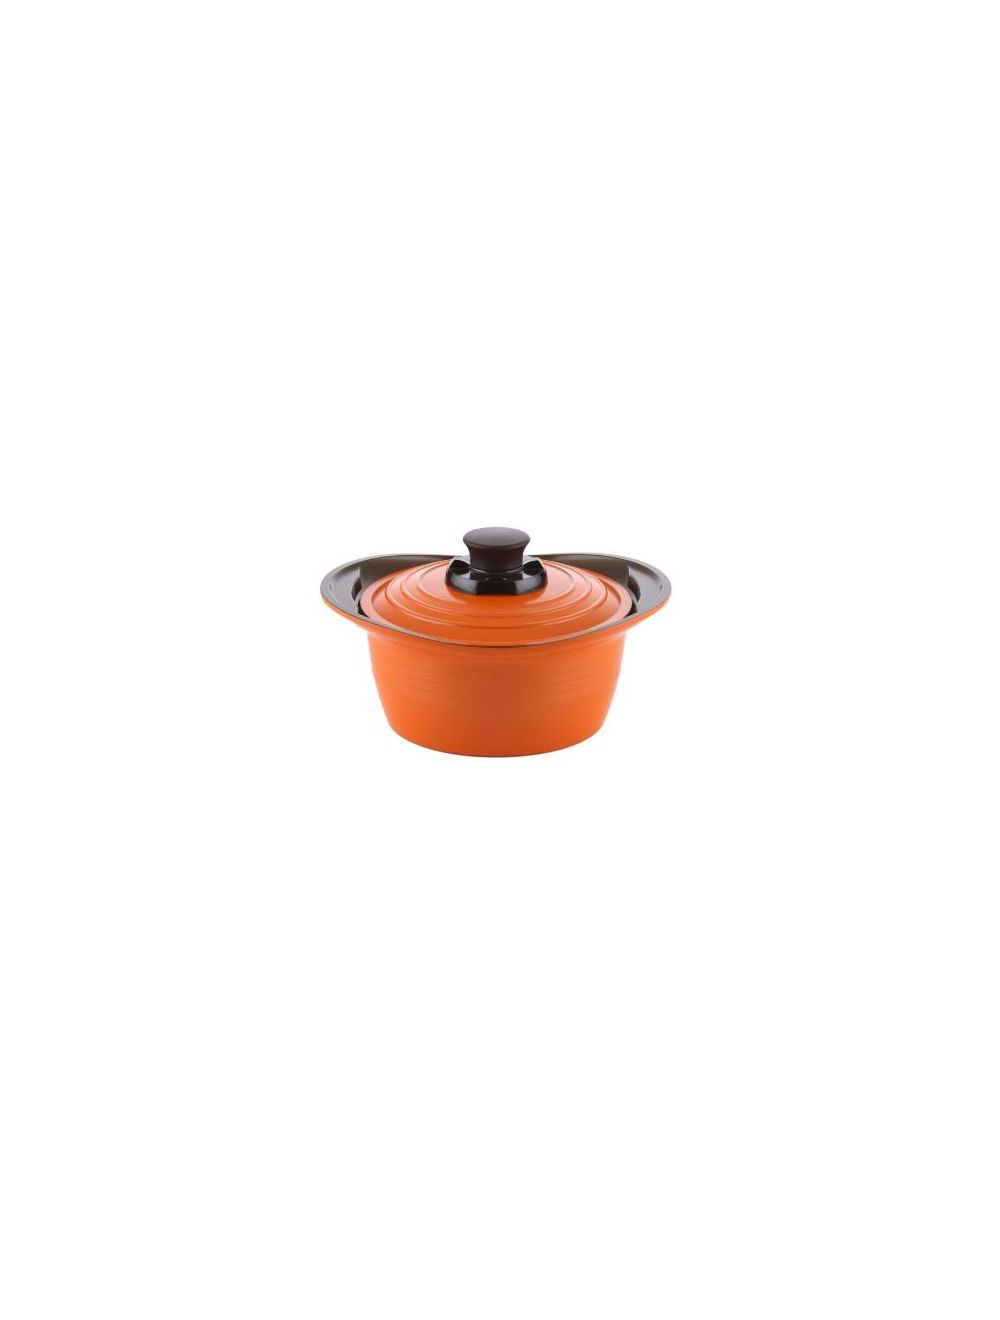 Roichen Natural Premium Pot Orange 20 cm-RPC-20C/O